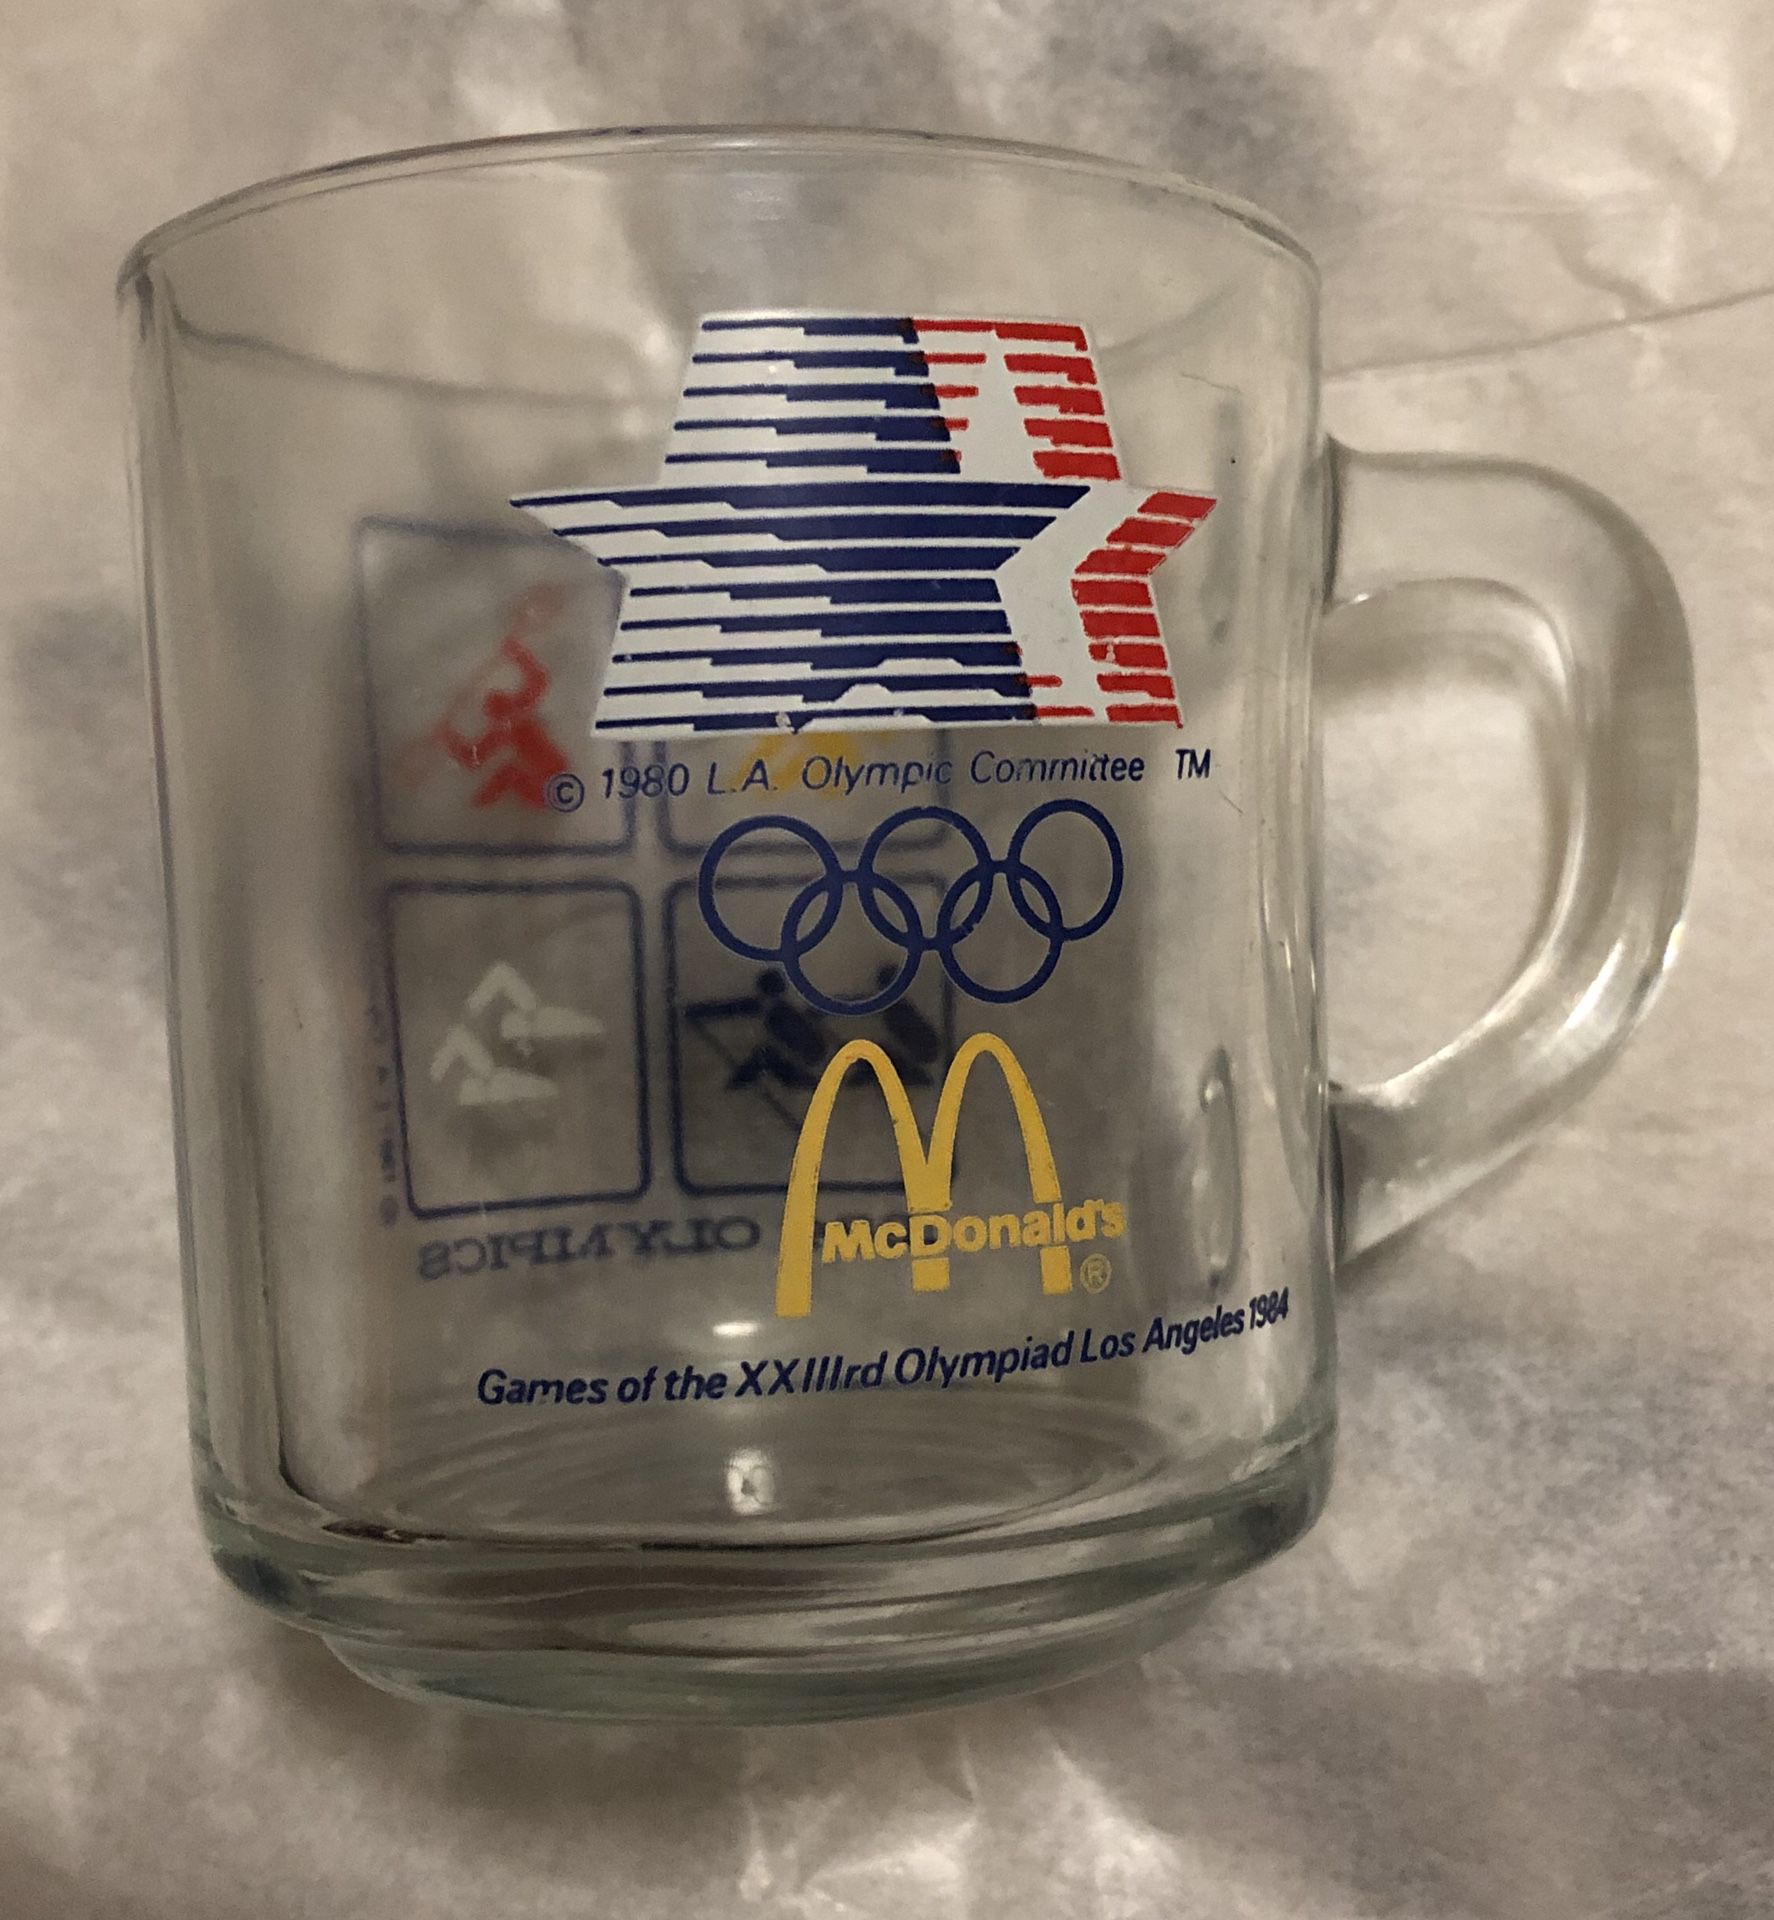 MCDONALD'S GLASS 1984 OLYMPICS COFFEE TEA MUG COLLECTIBLE OLYMPIC MEMORABILIA